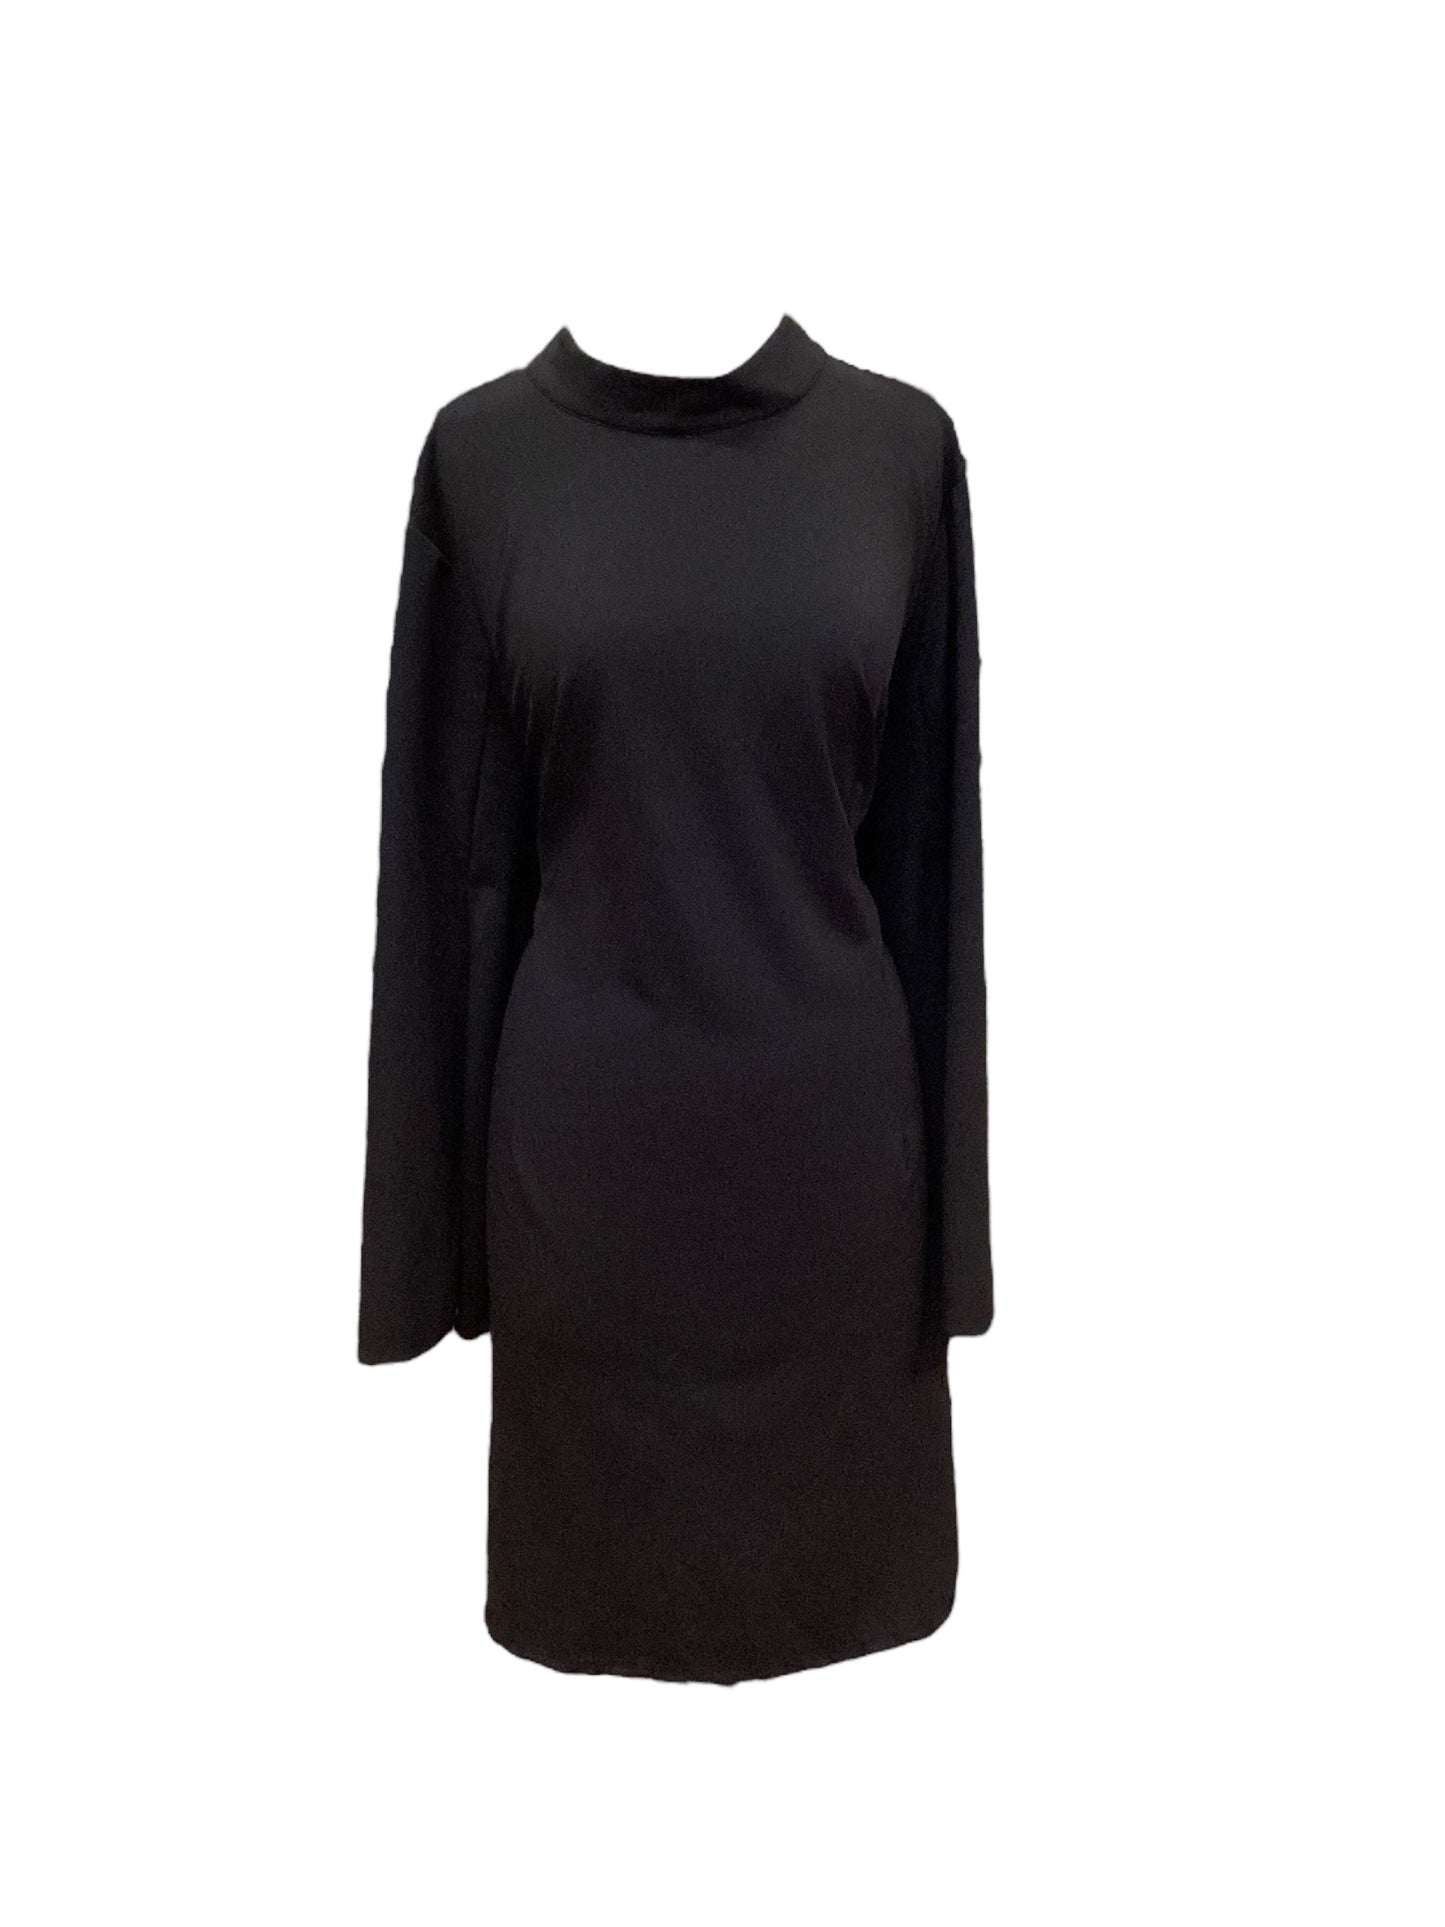 Black Dress Casual Midi Ashley Stewart, Size 26